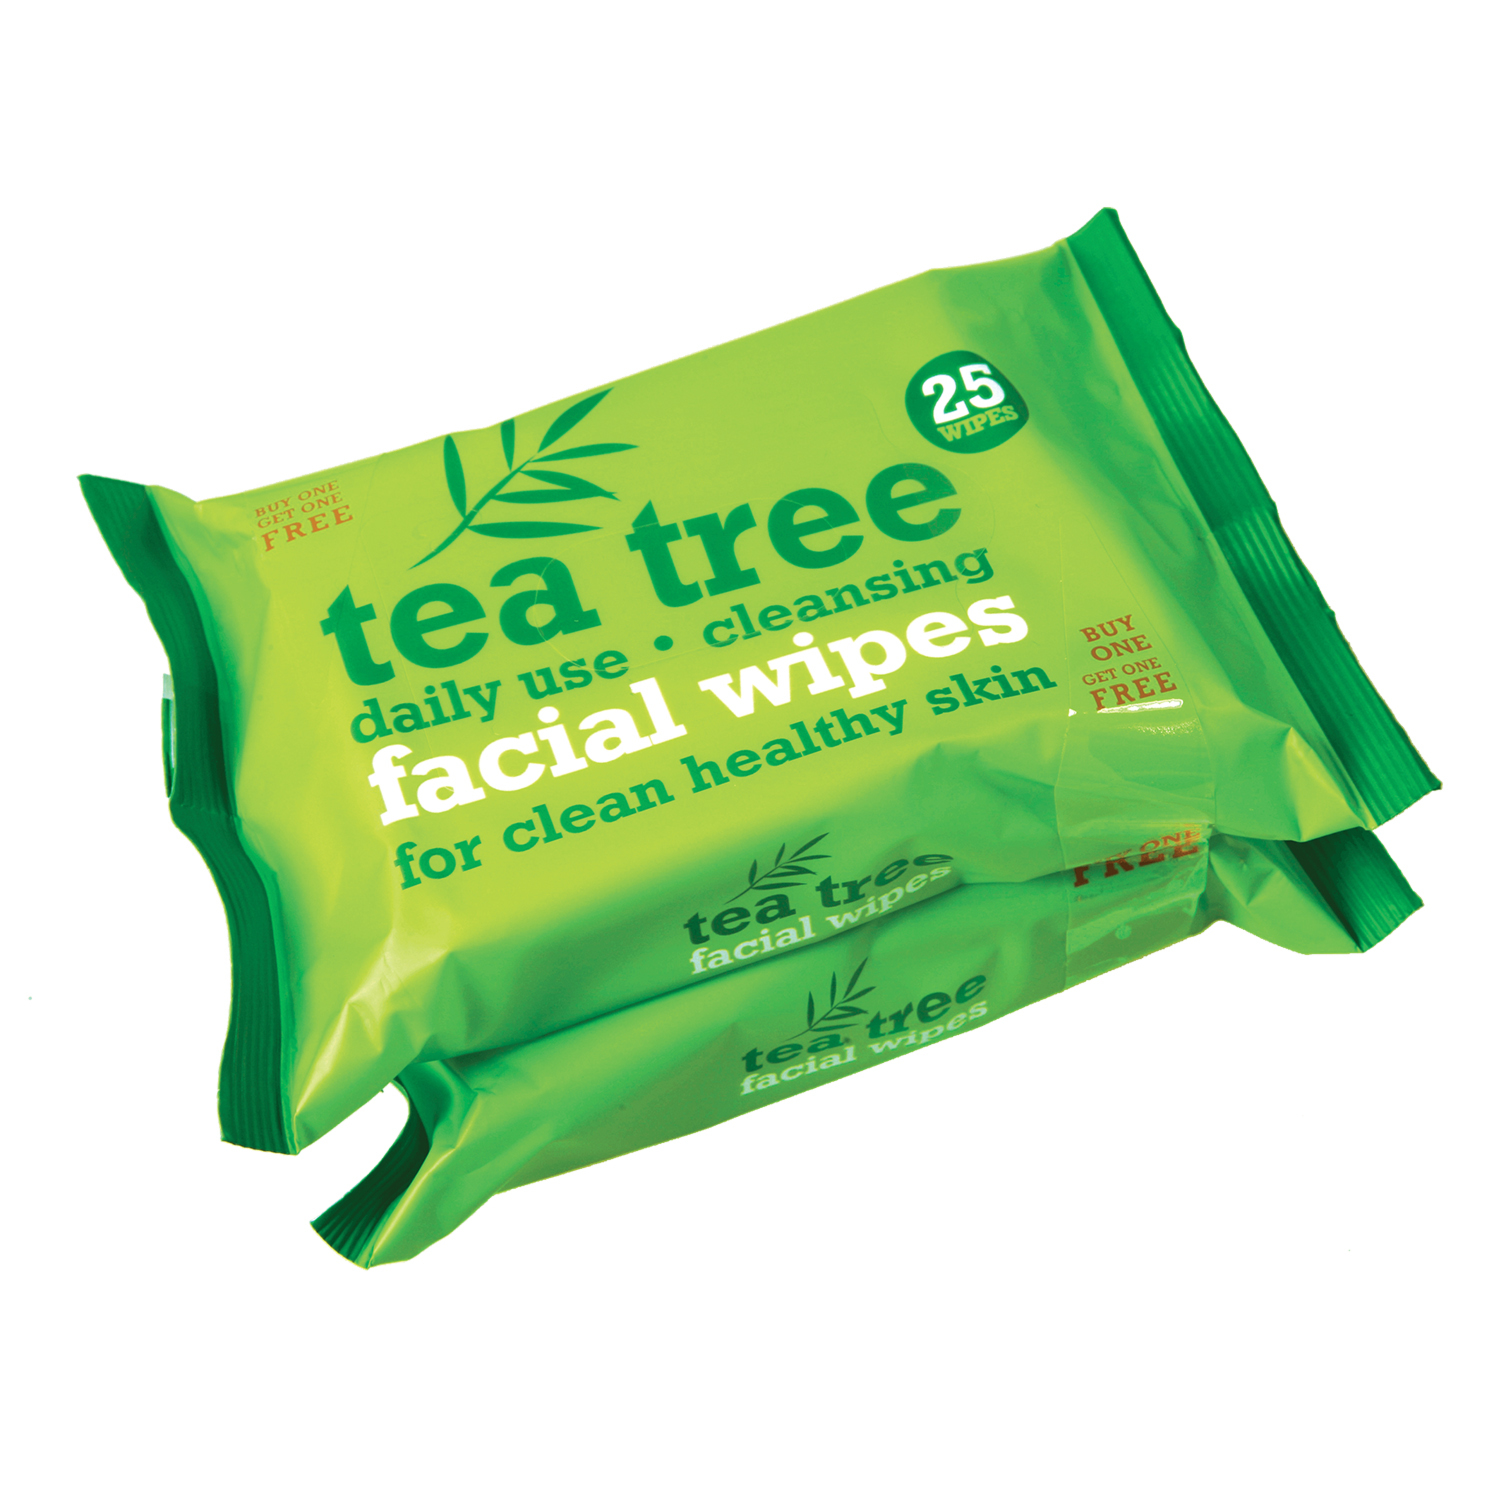 Tea Tree Face Wipes 2 Pack Image